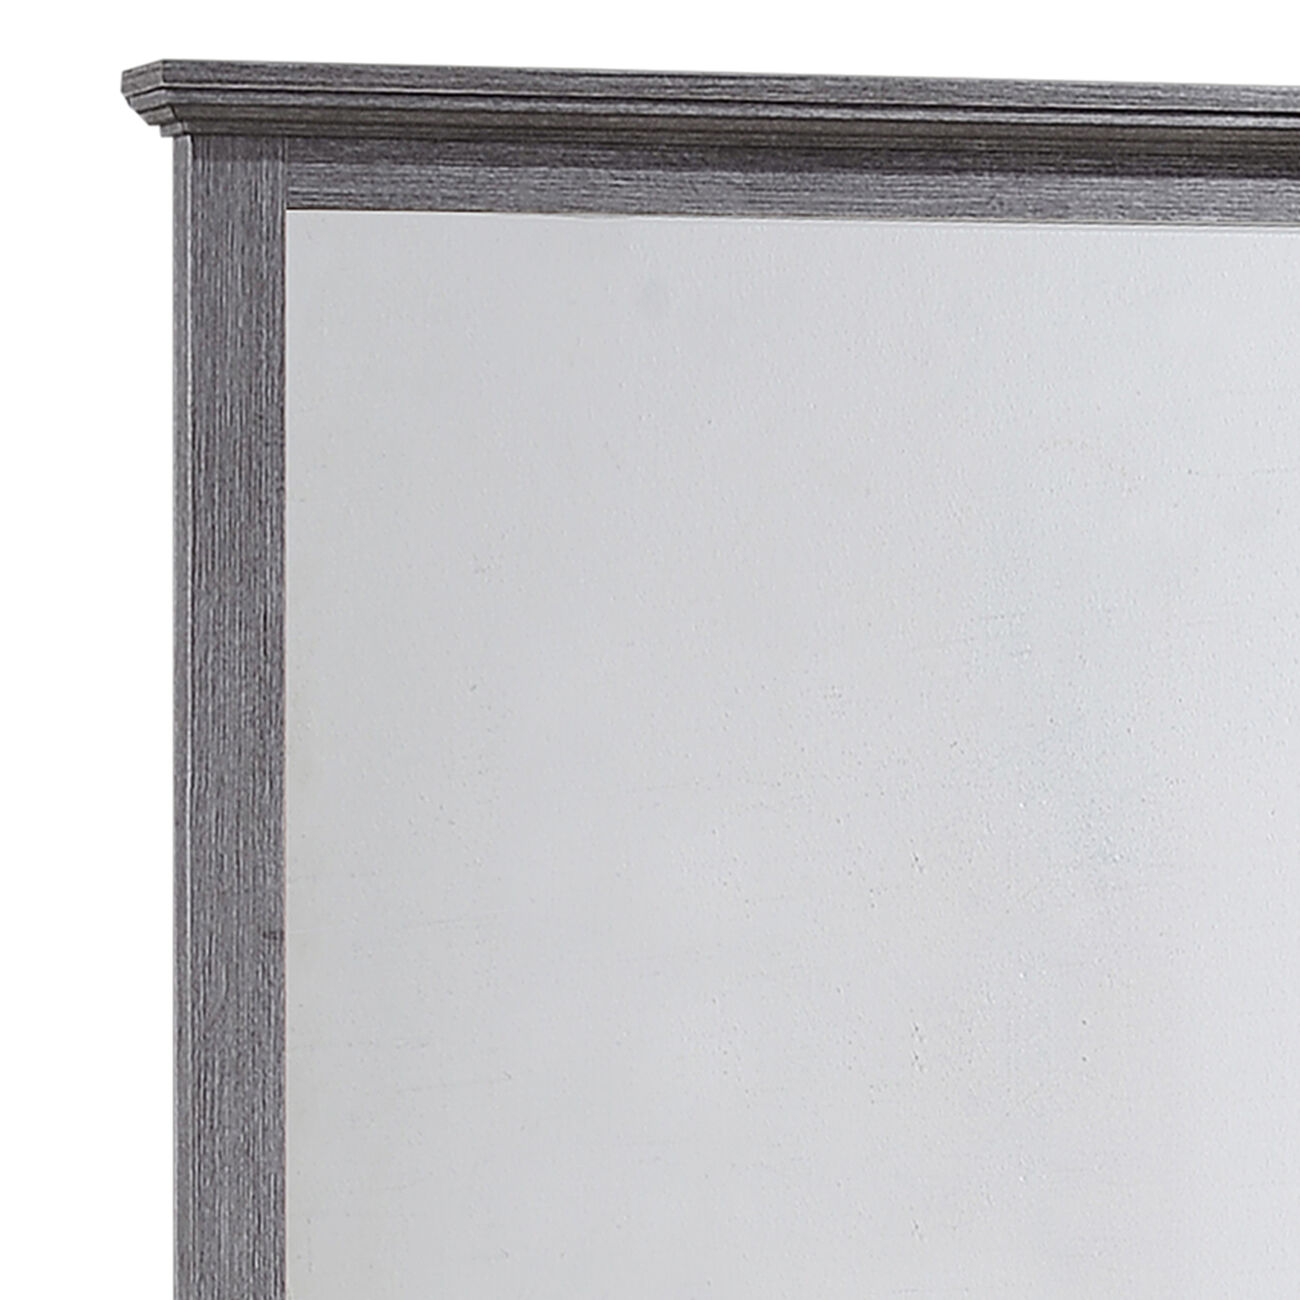 Rectangular Wood Encased Dresser Top Mirror, Gray and Silver - BM215160